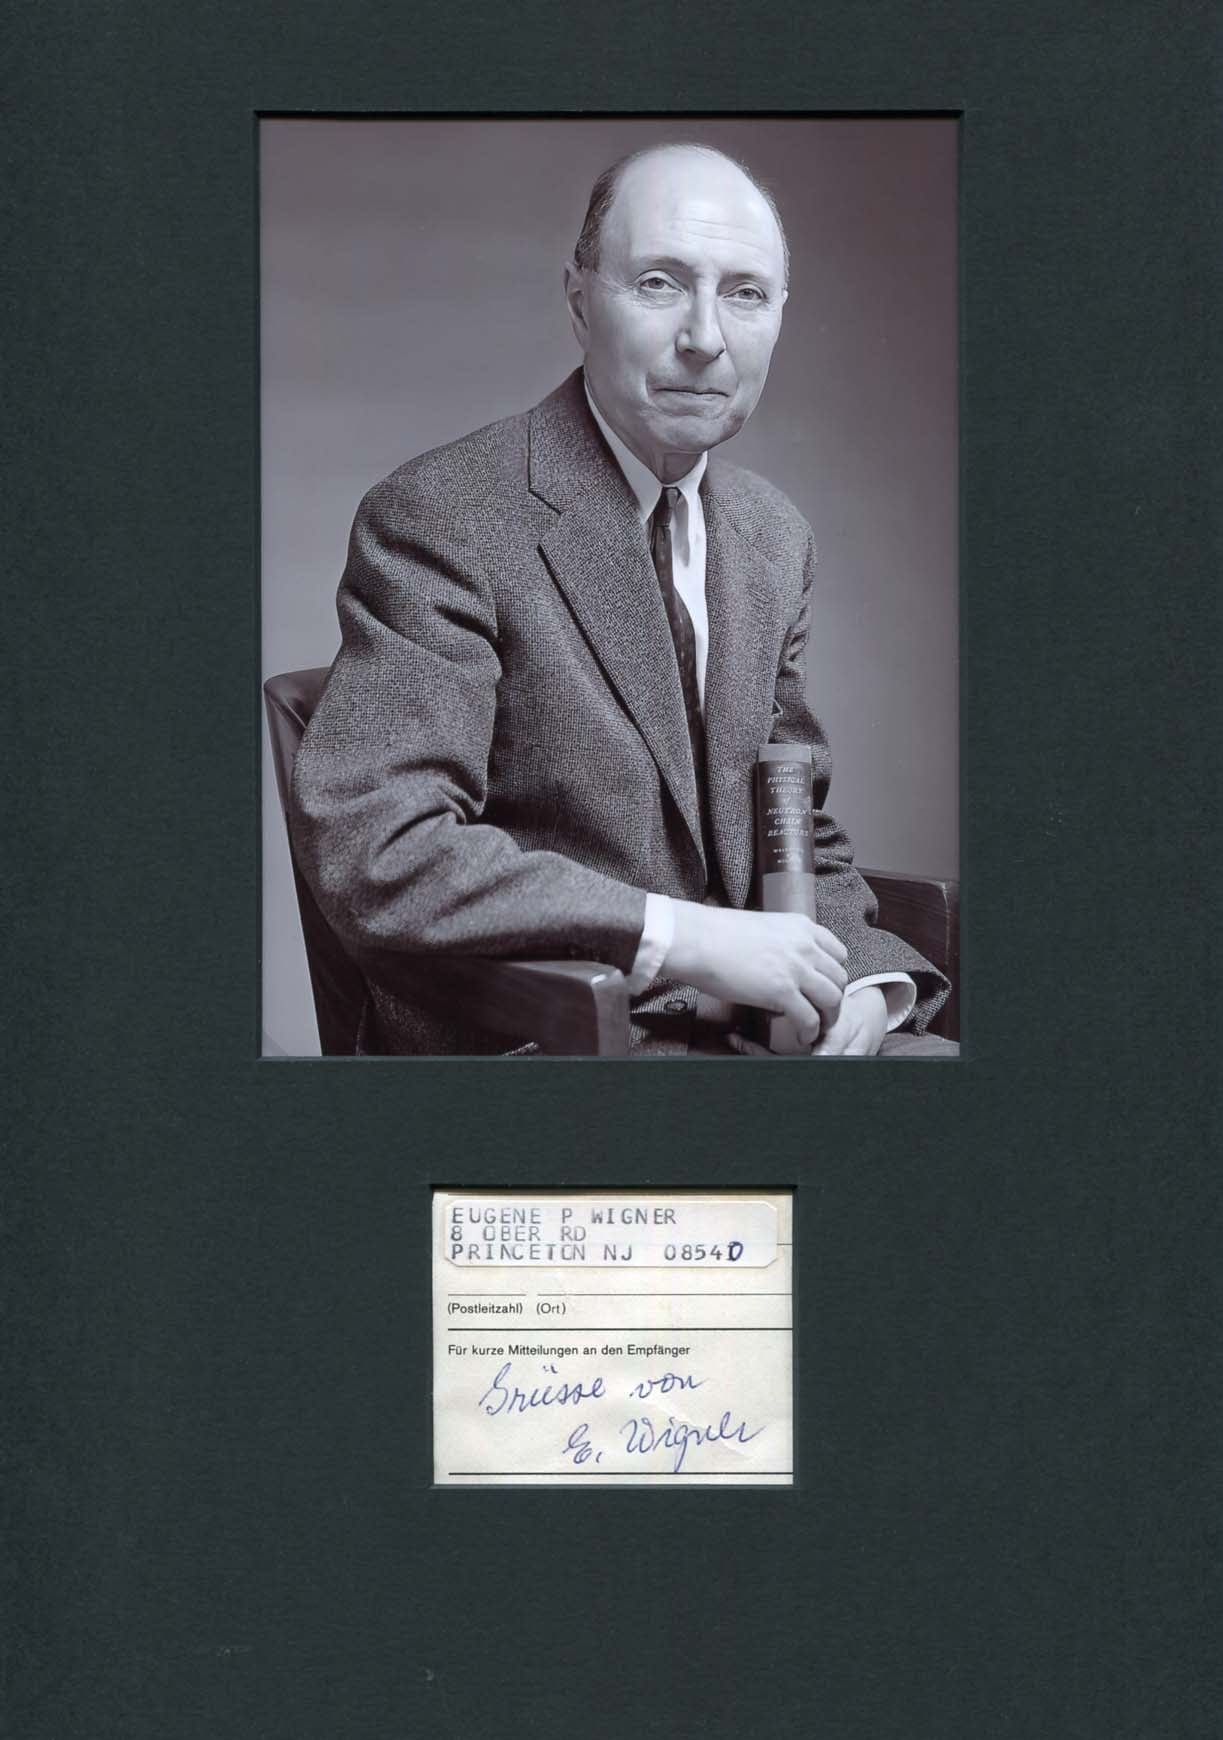 Eugene Paul  Wigner Autograph Autogramm | ID 7959807033493